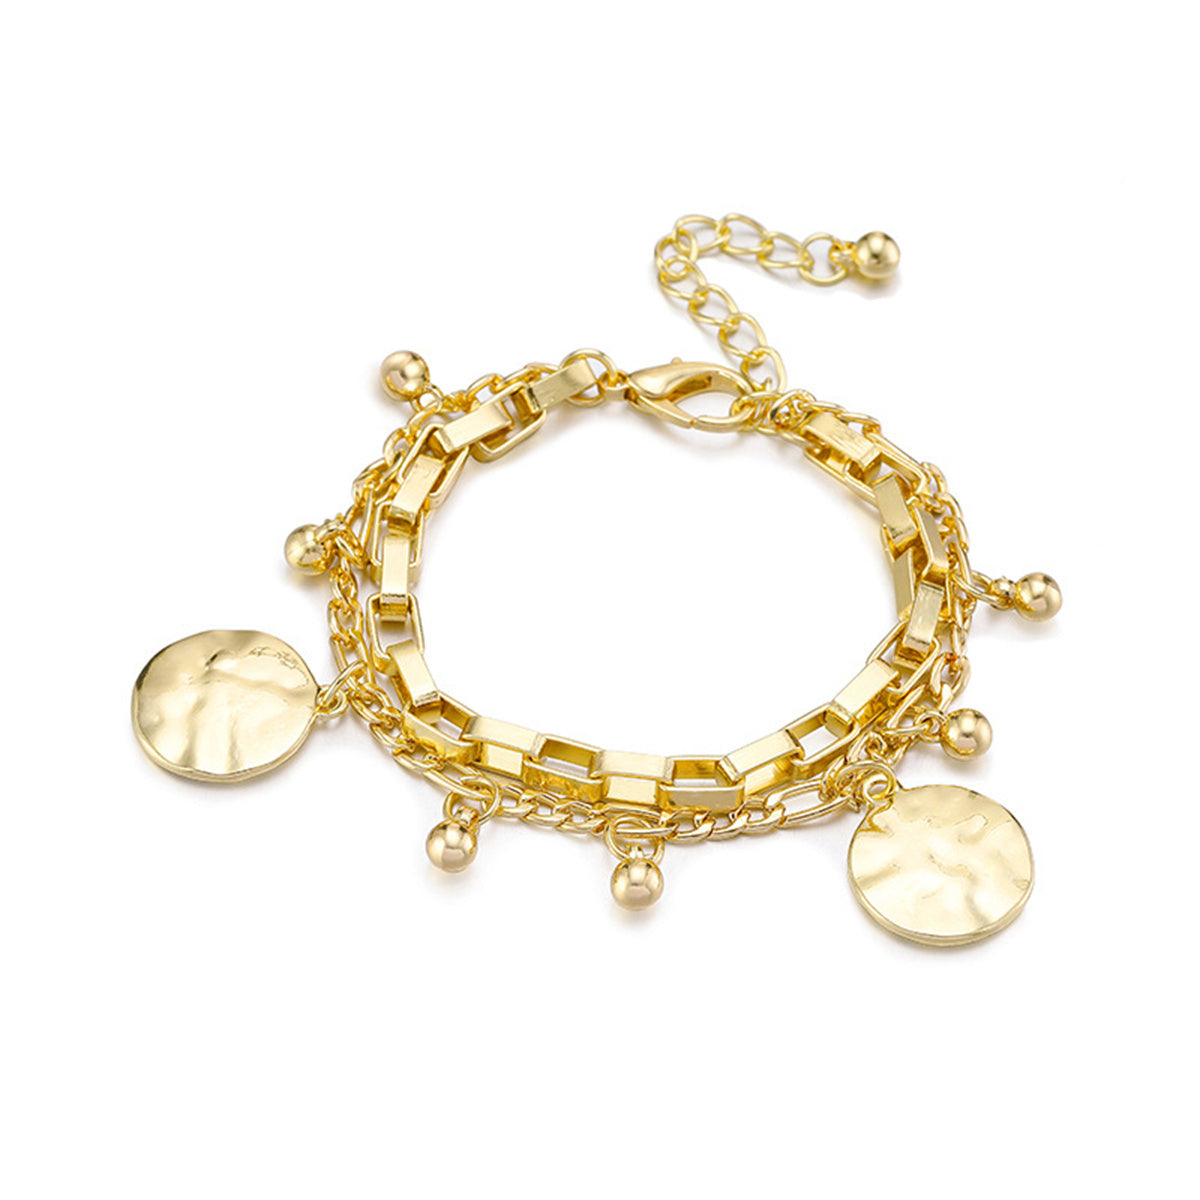 18K Gold-Plated Circular Charm Bracelet